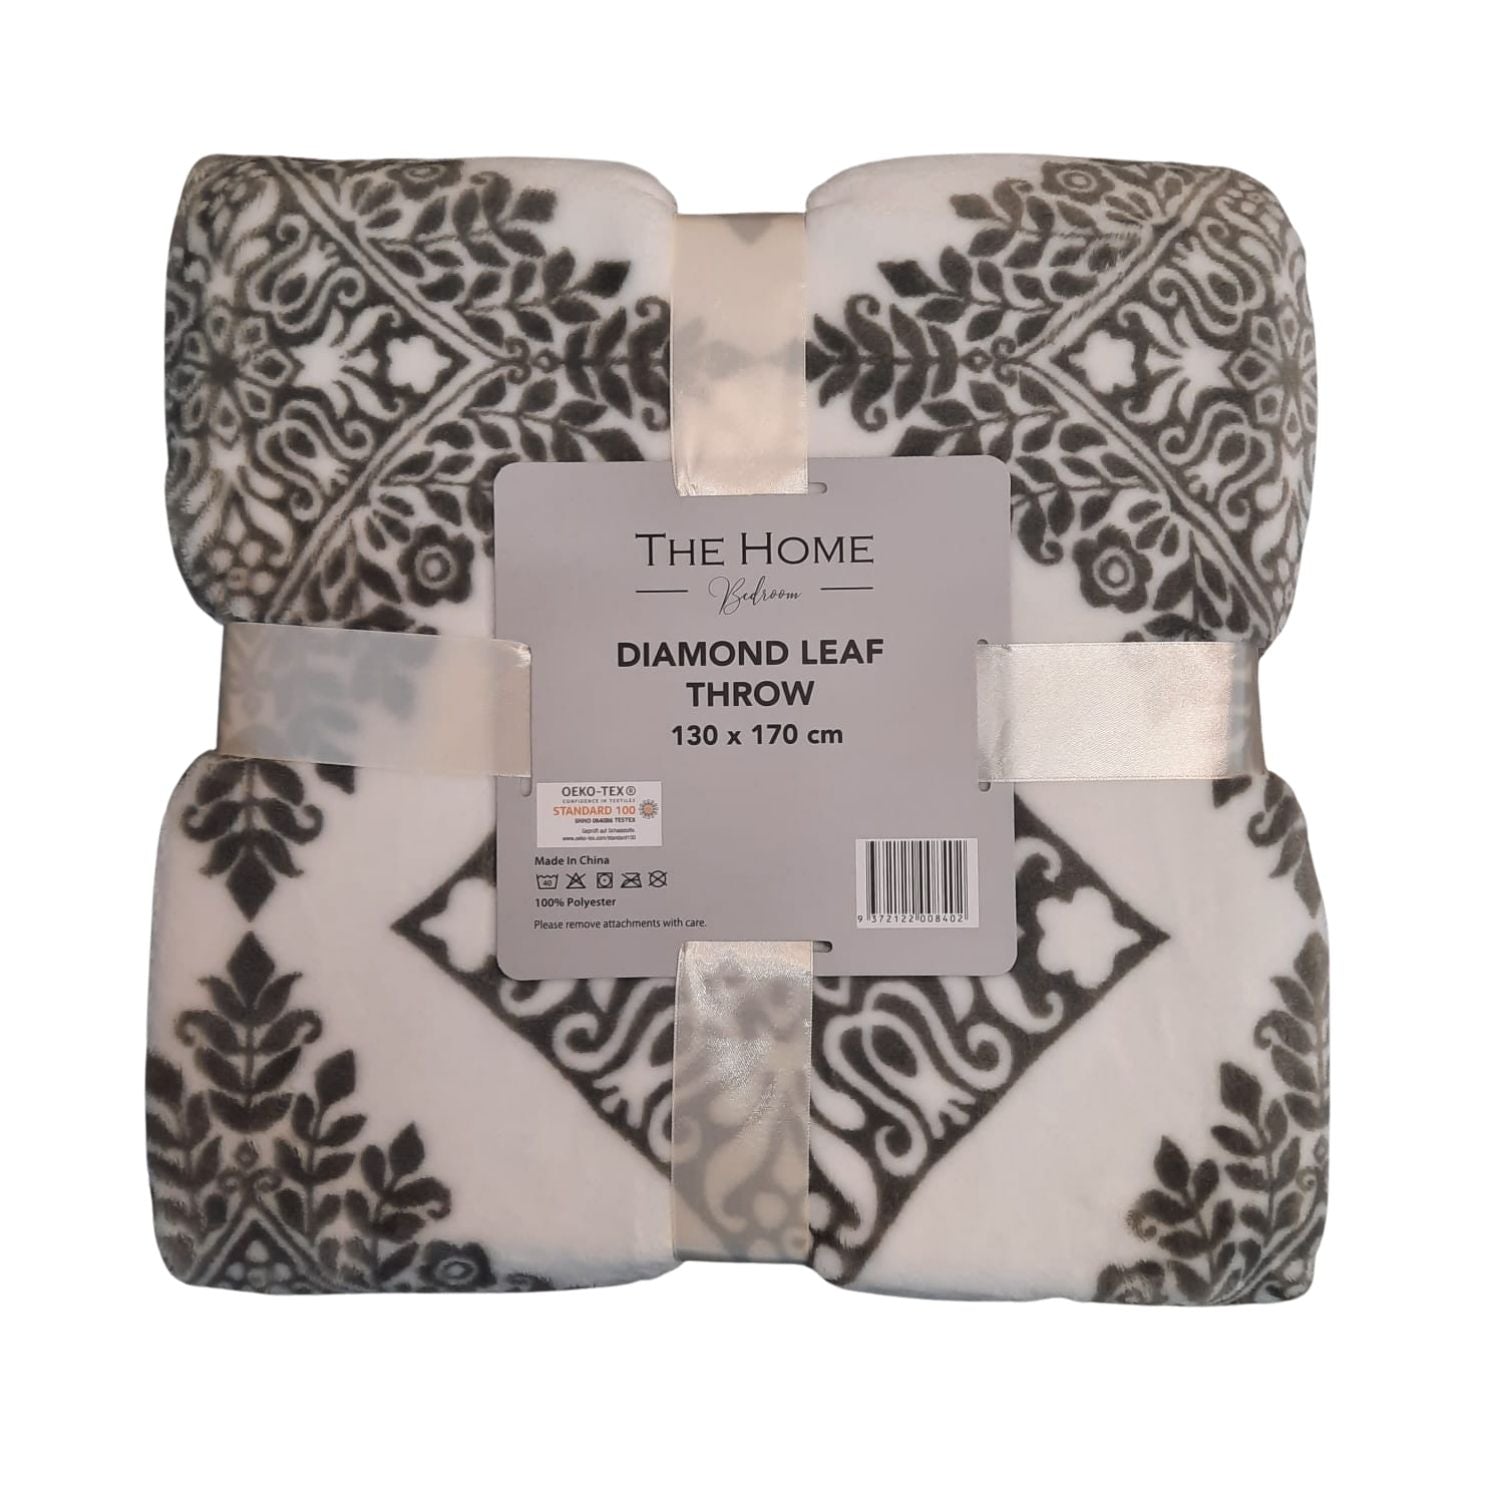 The Home Bedroom Diamond Leaf Blanket 130cm x 170cm - Grey 1 Shaws Department Stores